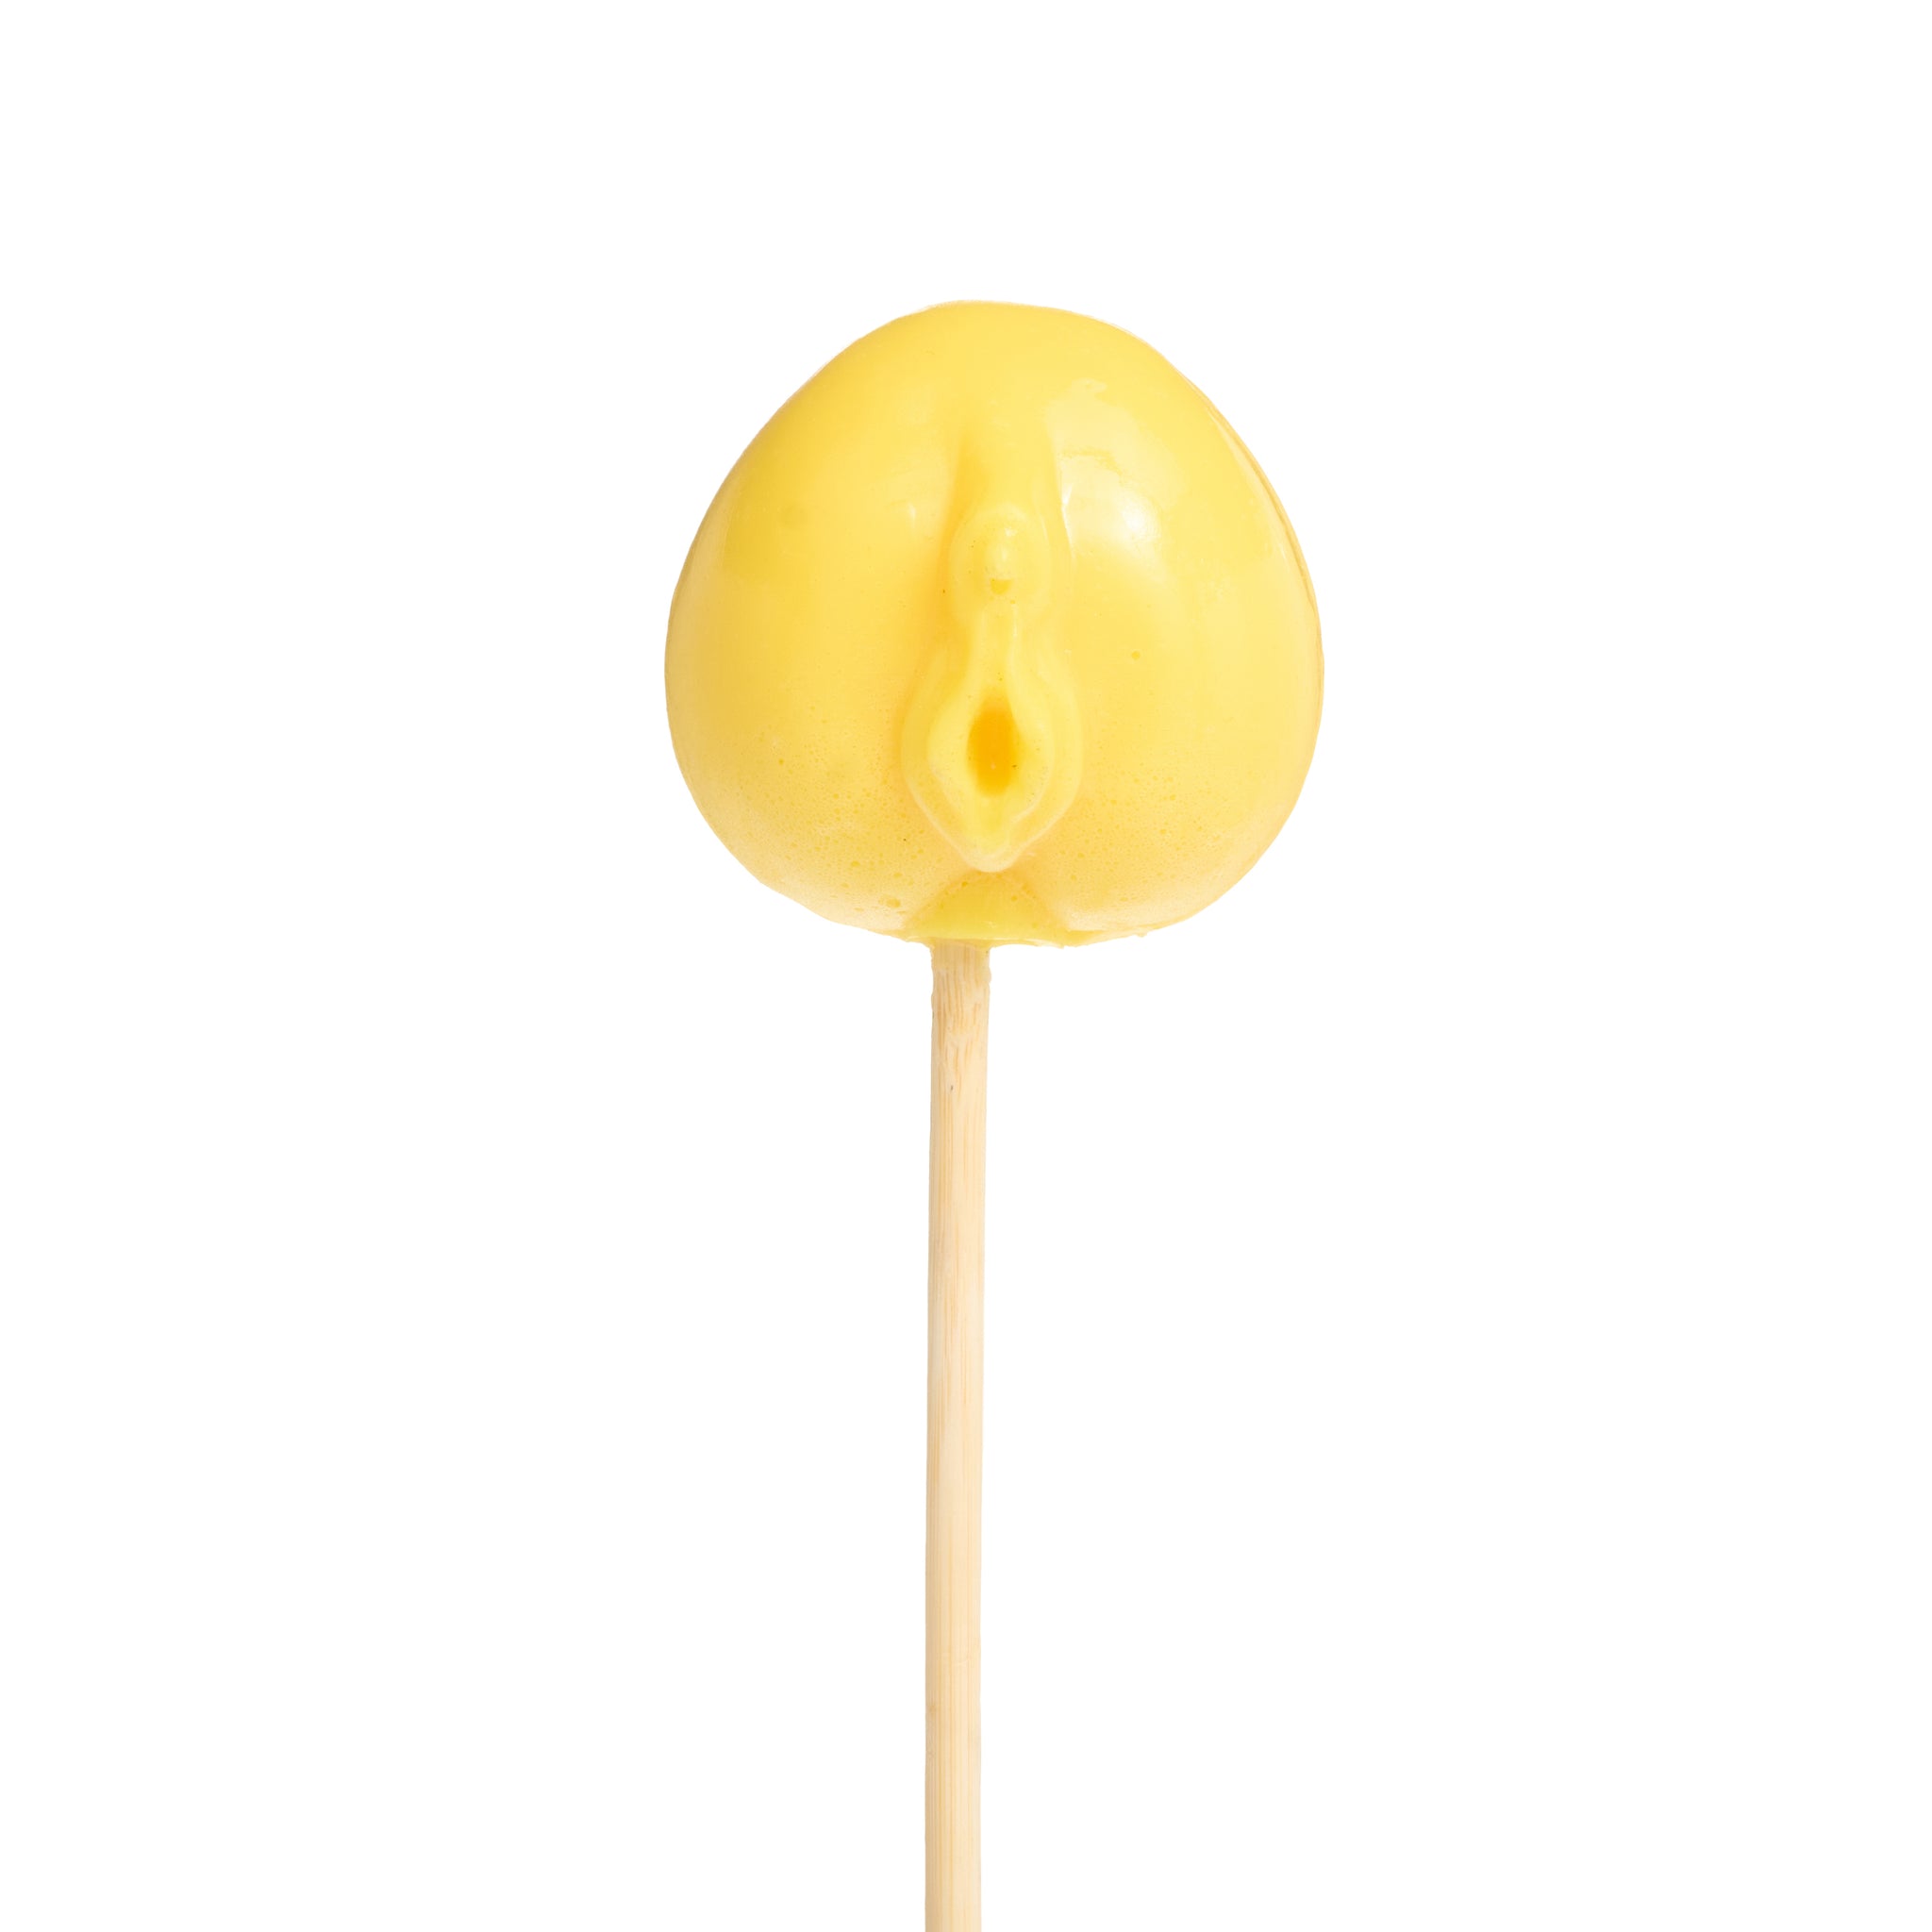 Vagina lollipop candy - Ebay